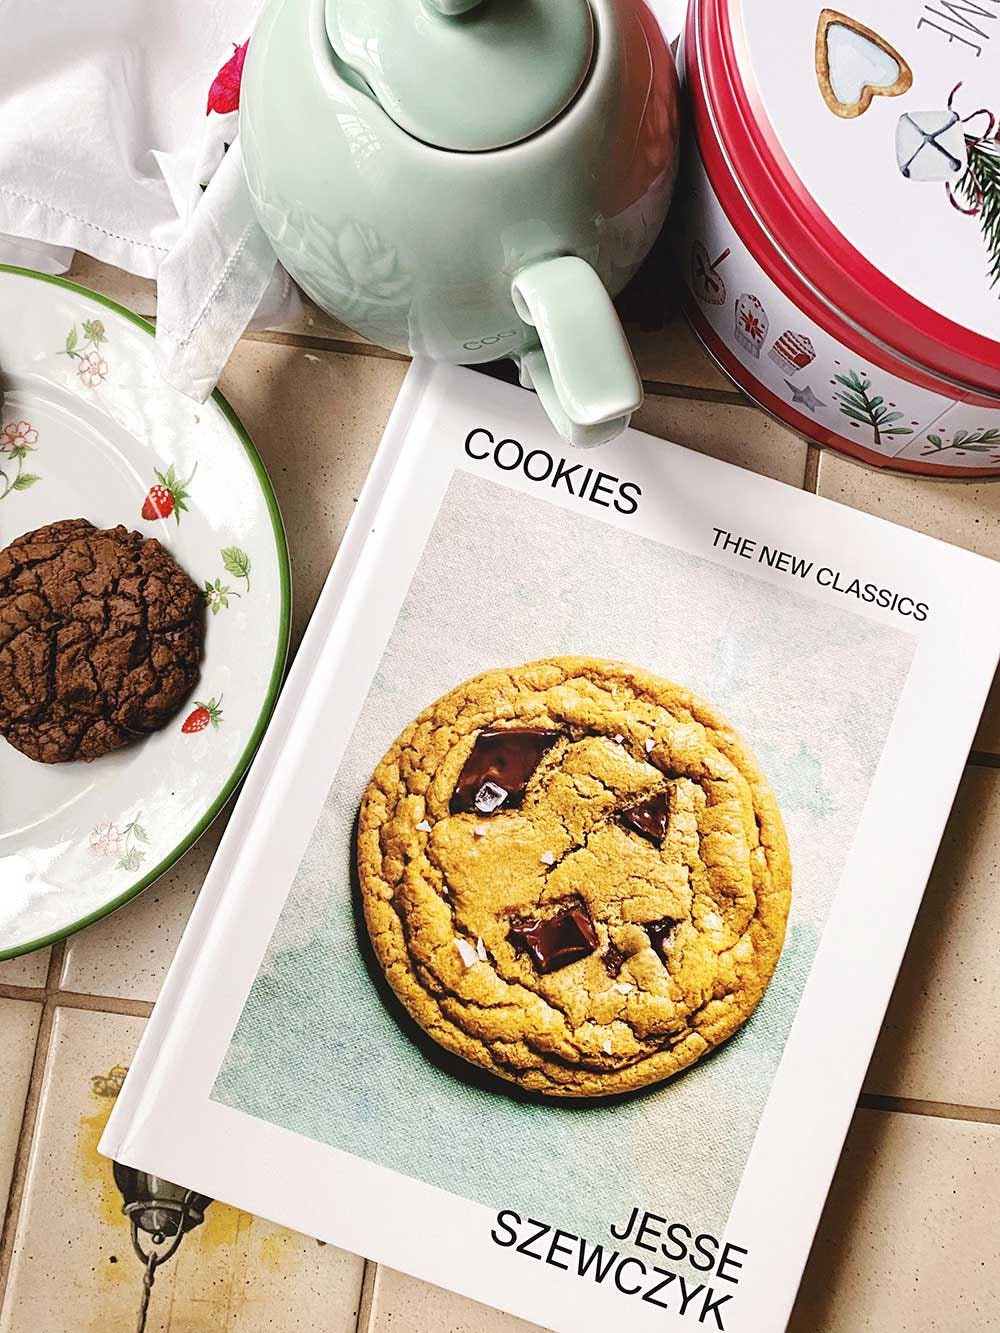 Cookies, the new classics de Jesse Szewczyk Clarkson Potter